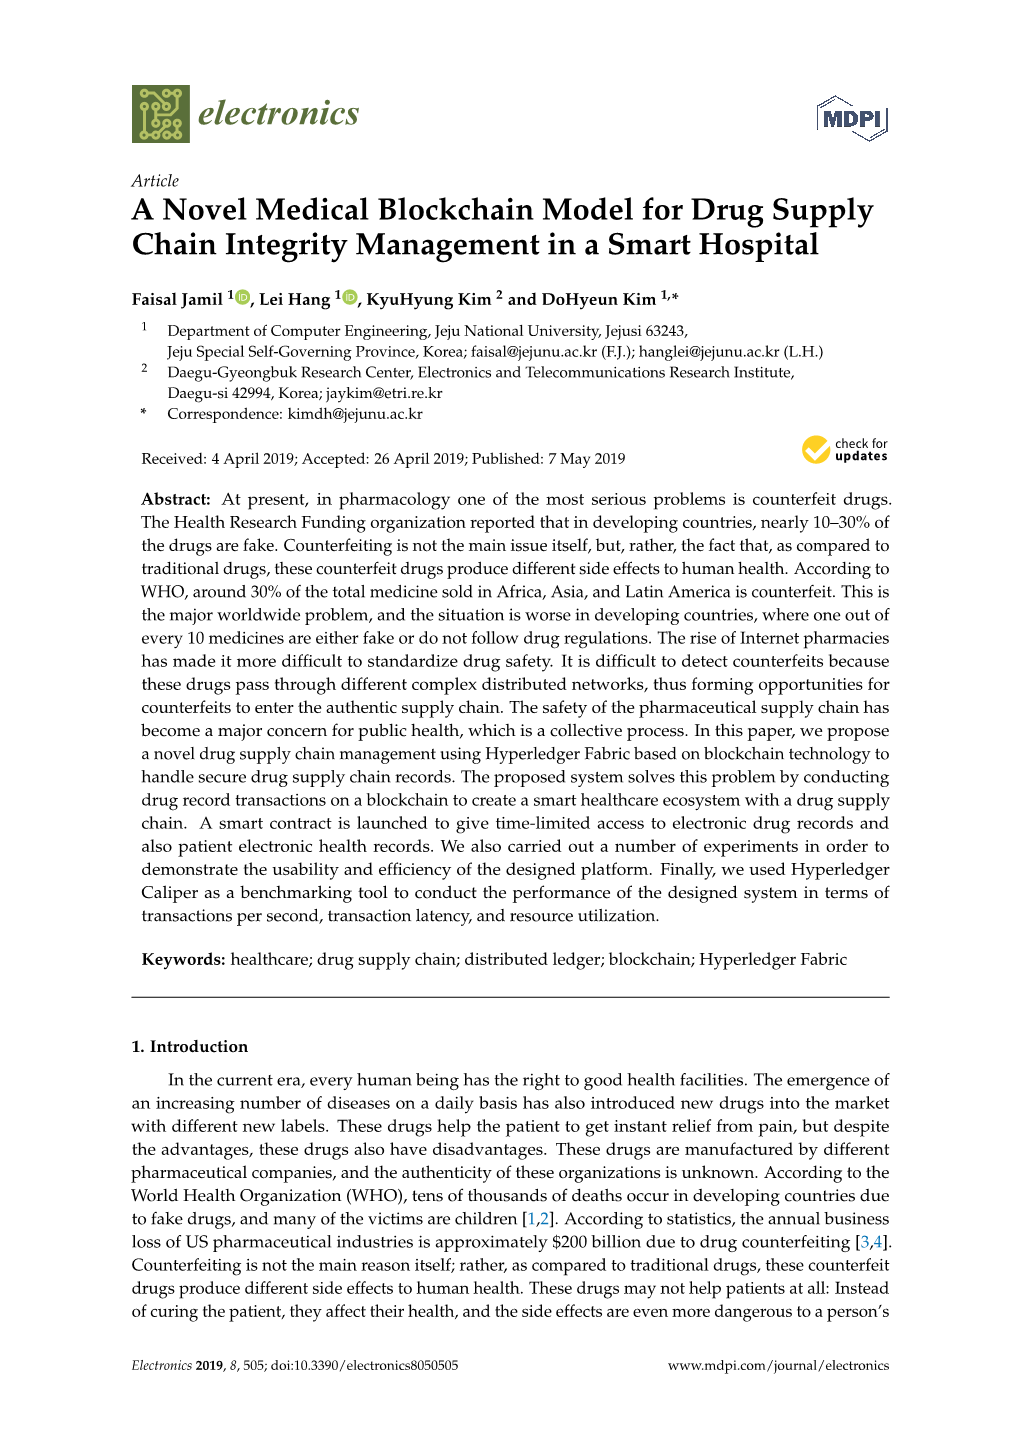 A Novel Medical Blockchain Model for Drug Supply Chain Integrity Management in a Smart Hospital